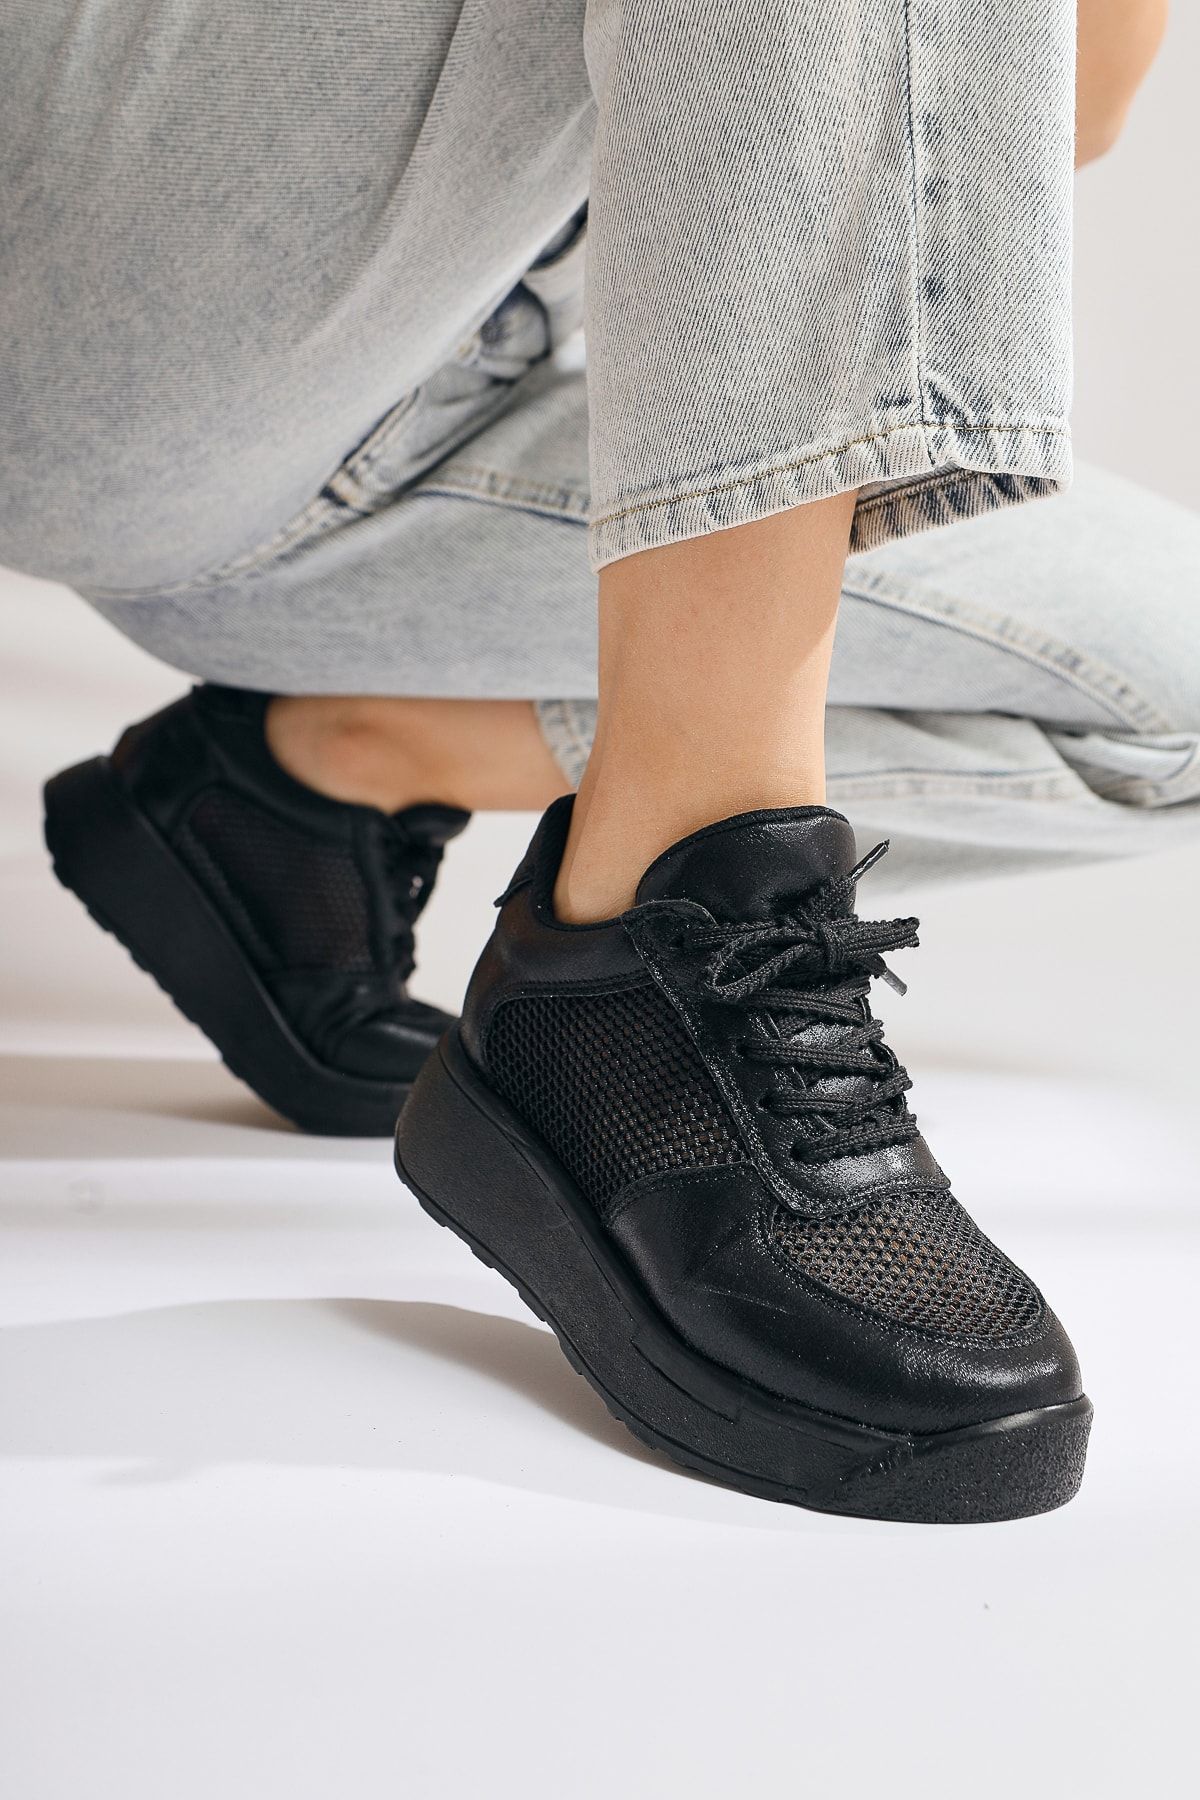 Limoya Kany Siyah Fileli Sneakers Spor Ayakkabı